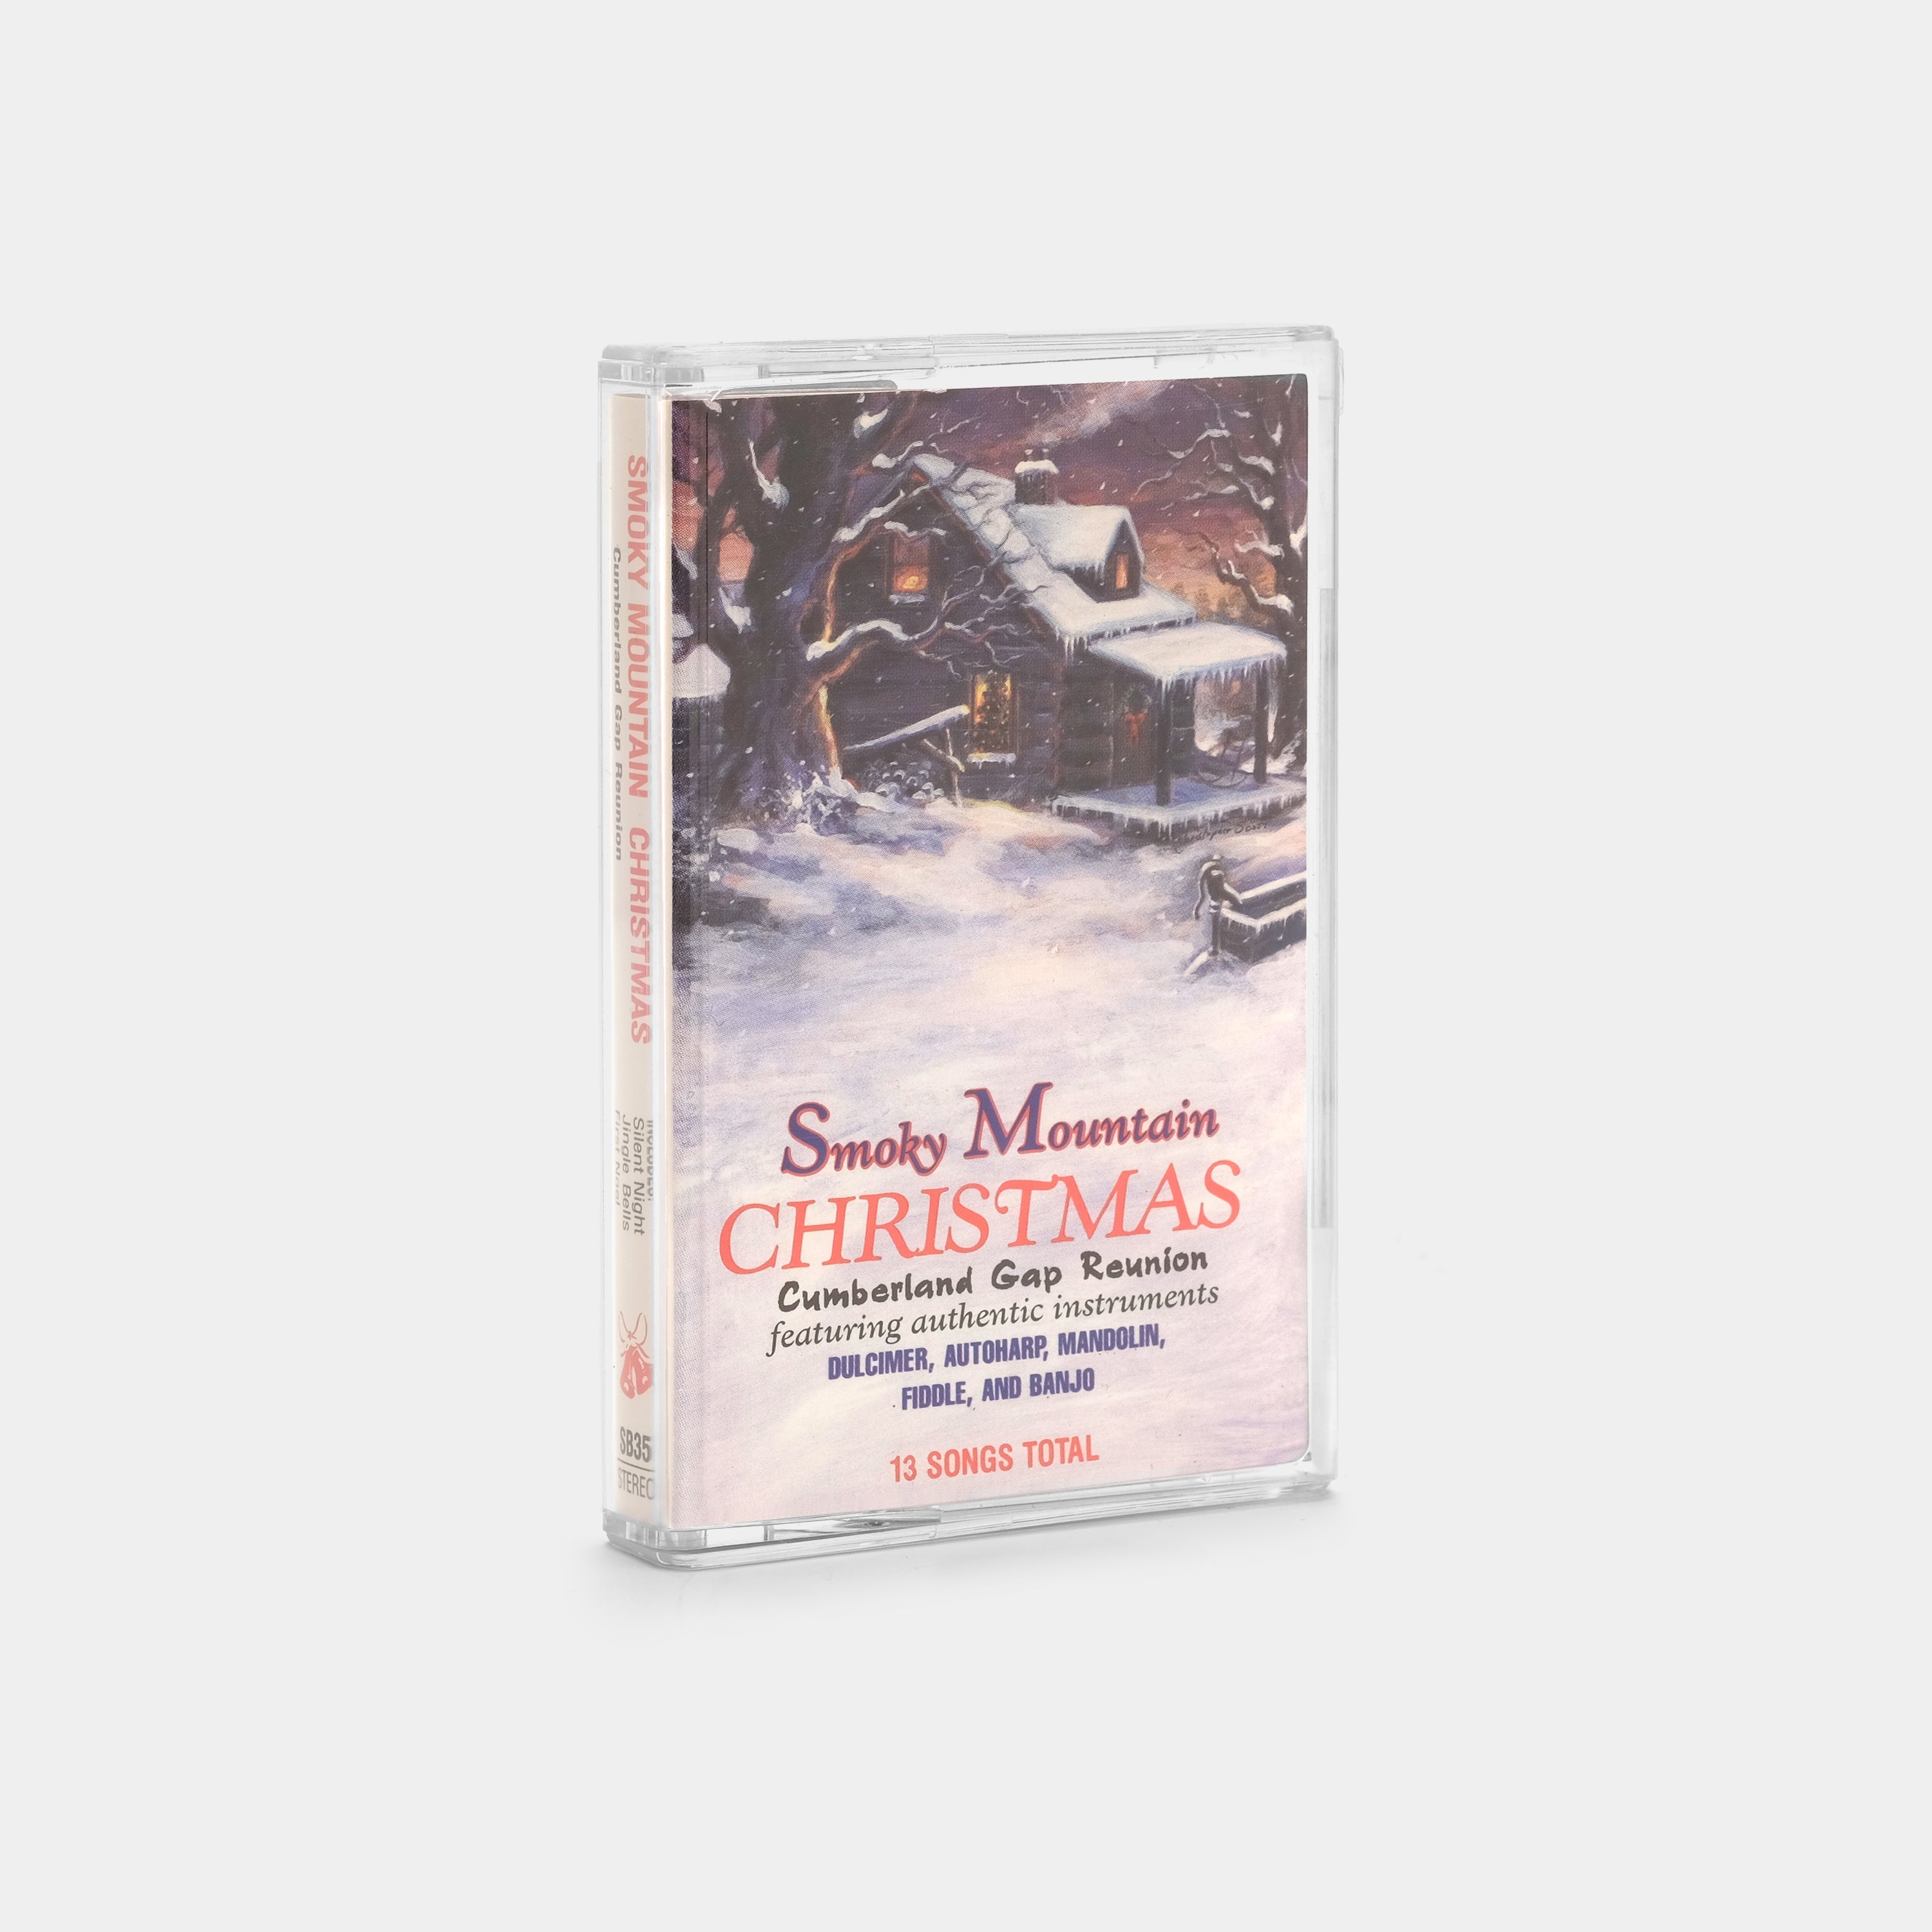 Cumberland Gap Reunion - Smoky Mountain Christmas Cassette Tape